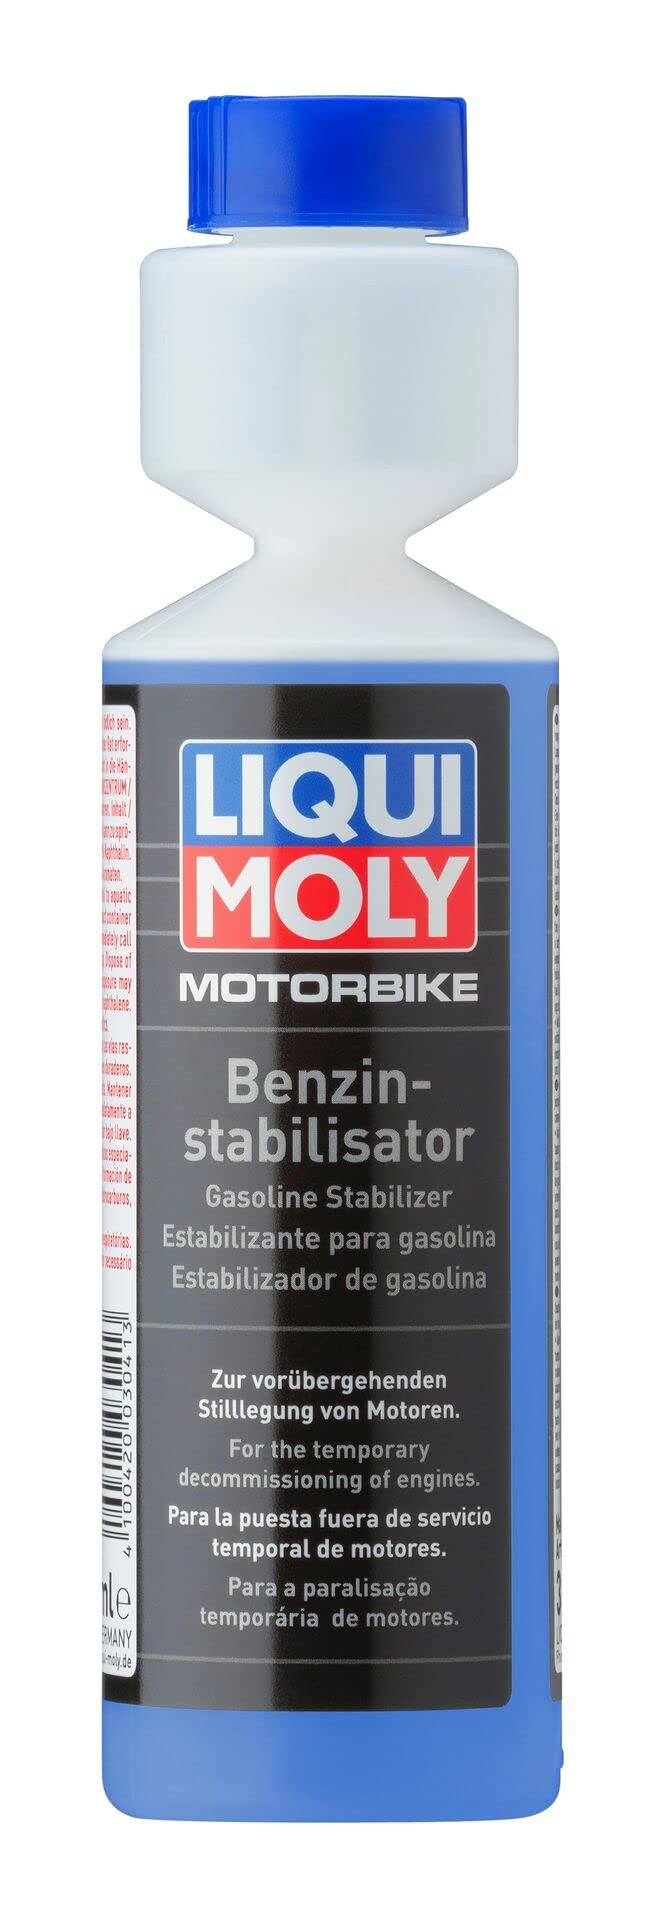 LIQUI MOLY Motorbike Benzinstabilisator | 250 ml | Motorrad Benzinadditiv | Art.-Nr.: 3041 von Liqui Moly